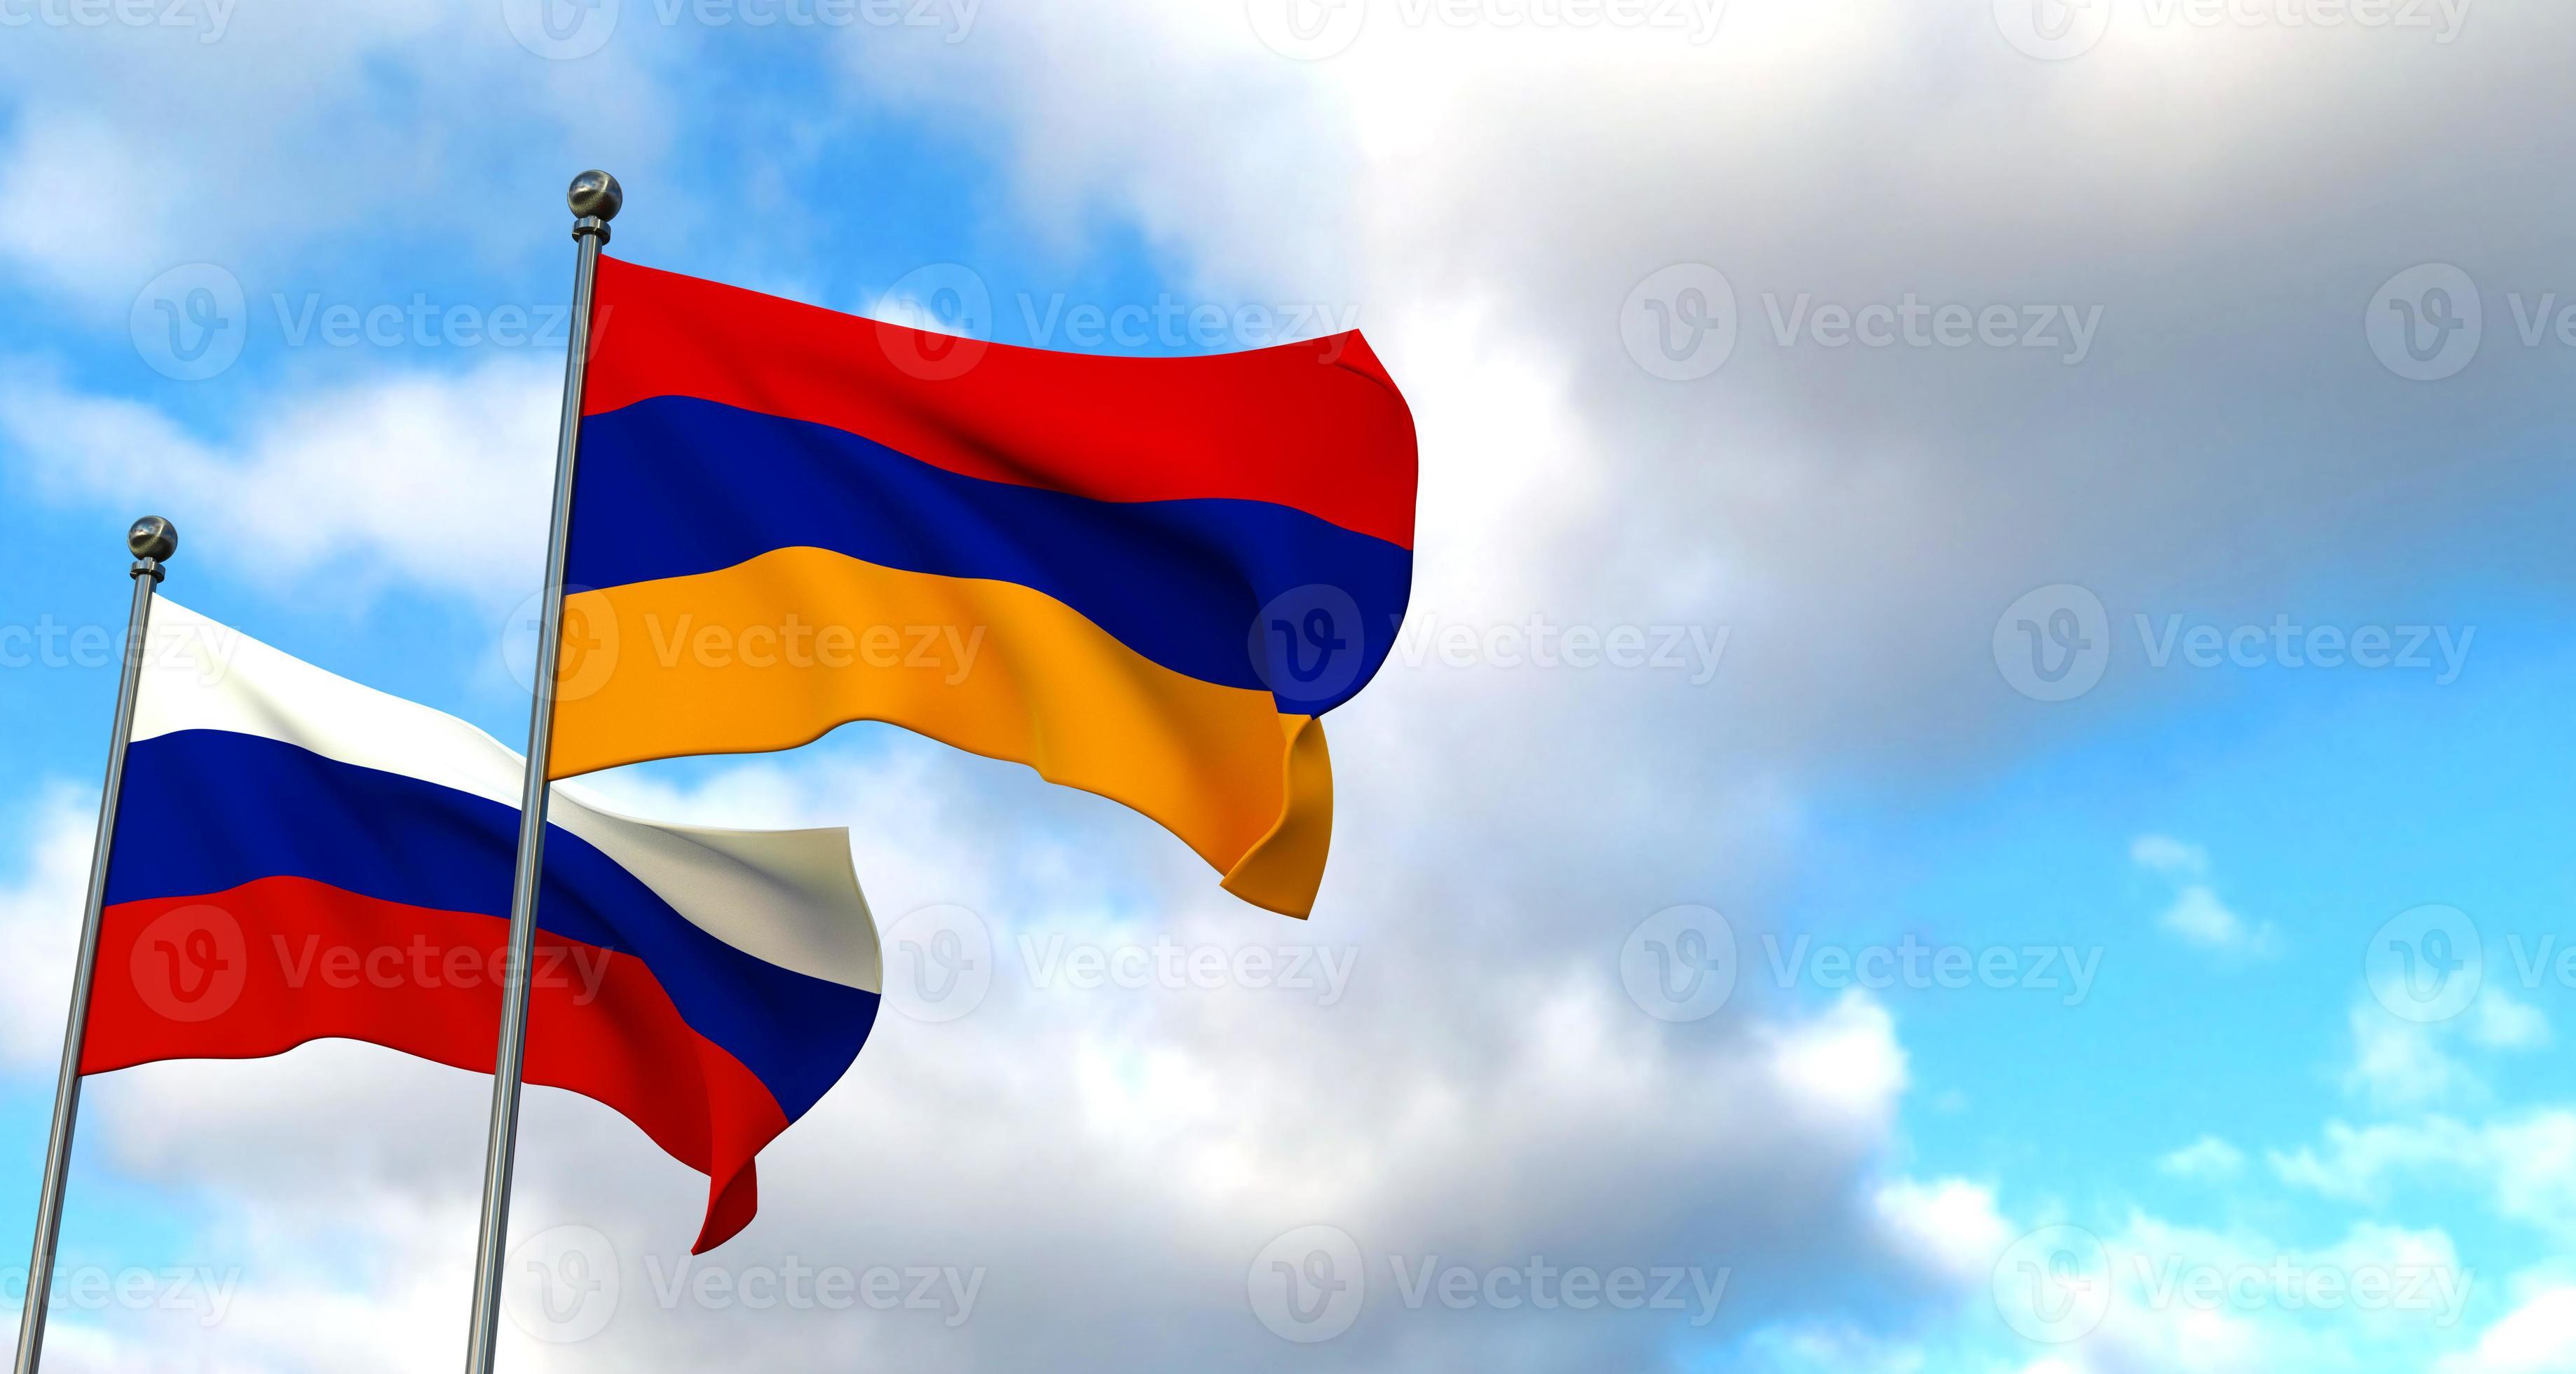 Russia alarmed over Armenia-US military drills